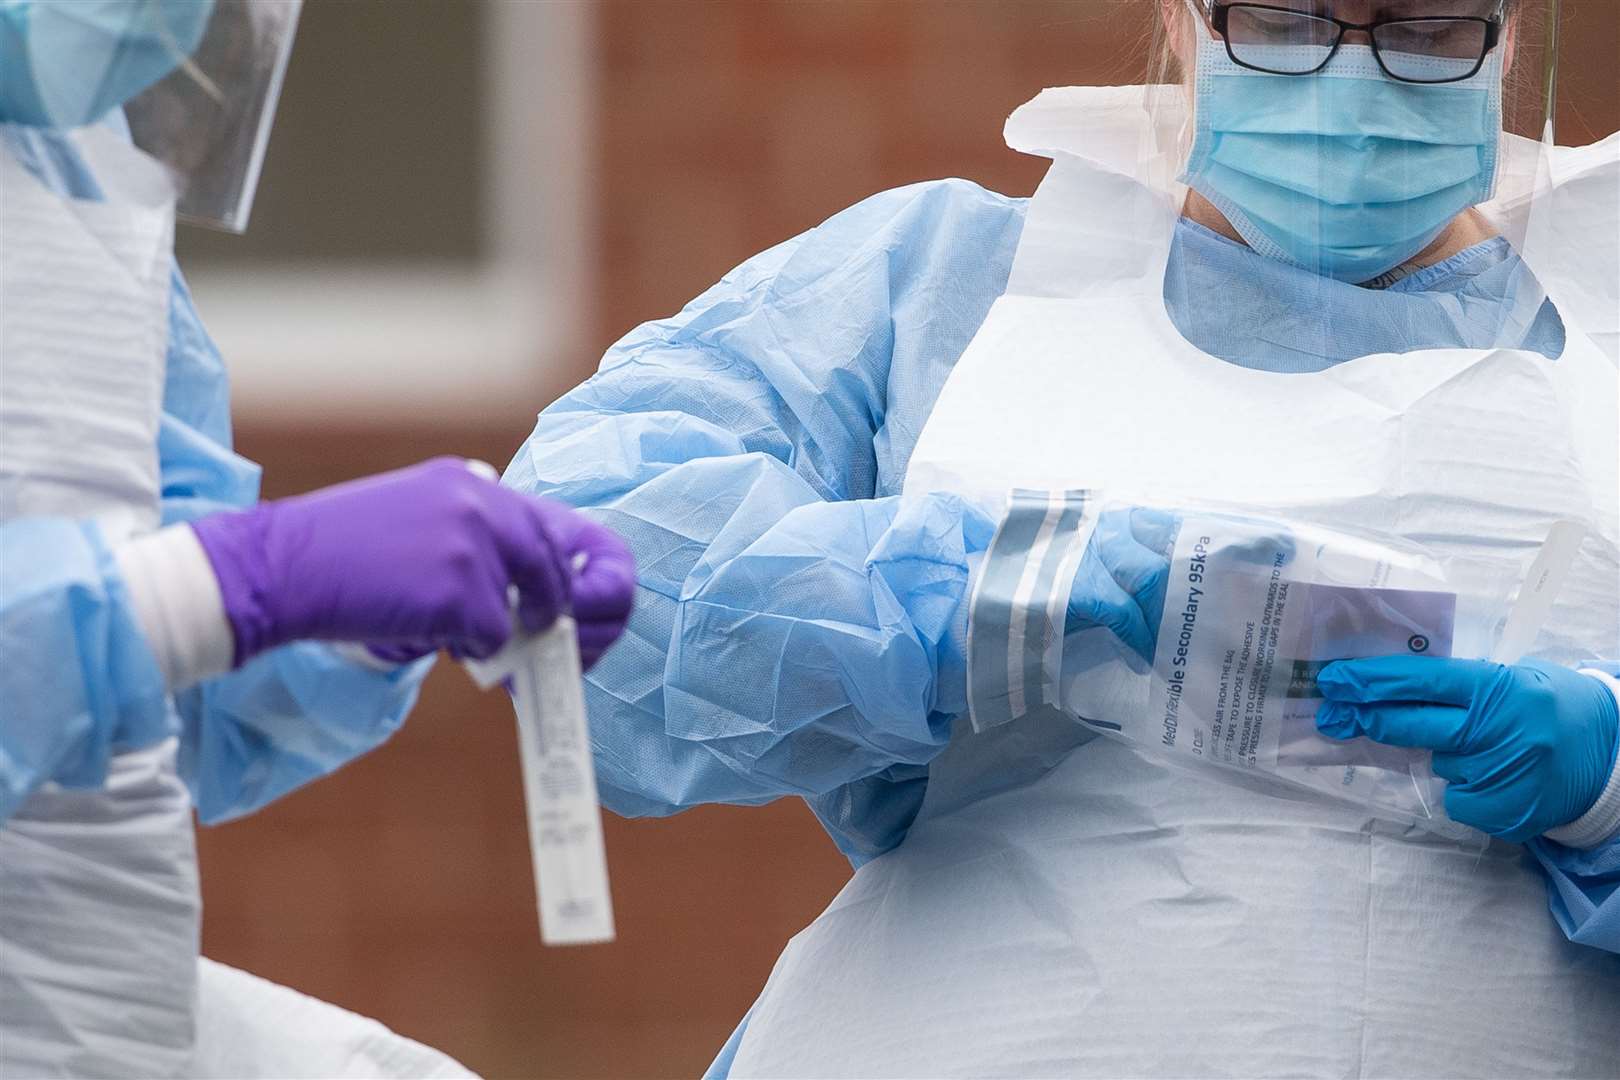 NHS staff carry out coronavirus tests at a facility in Bracebridge Heath, Lincoln (Joe Giddens/PA)